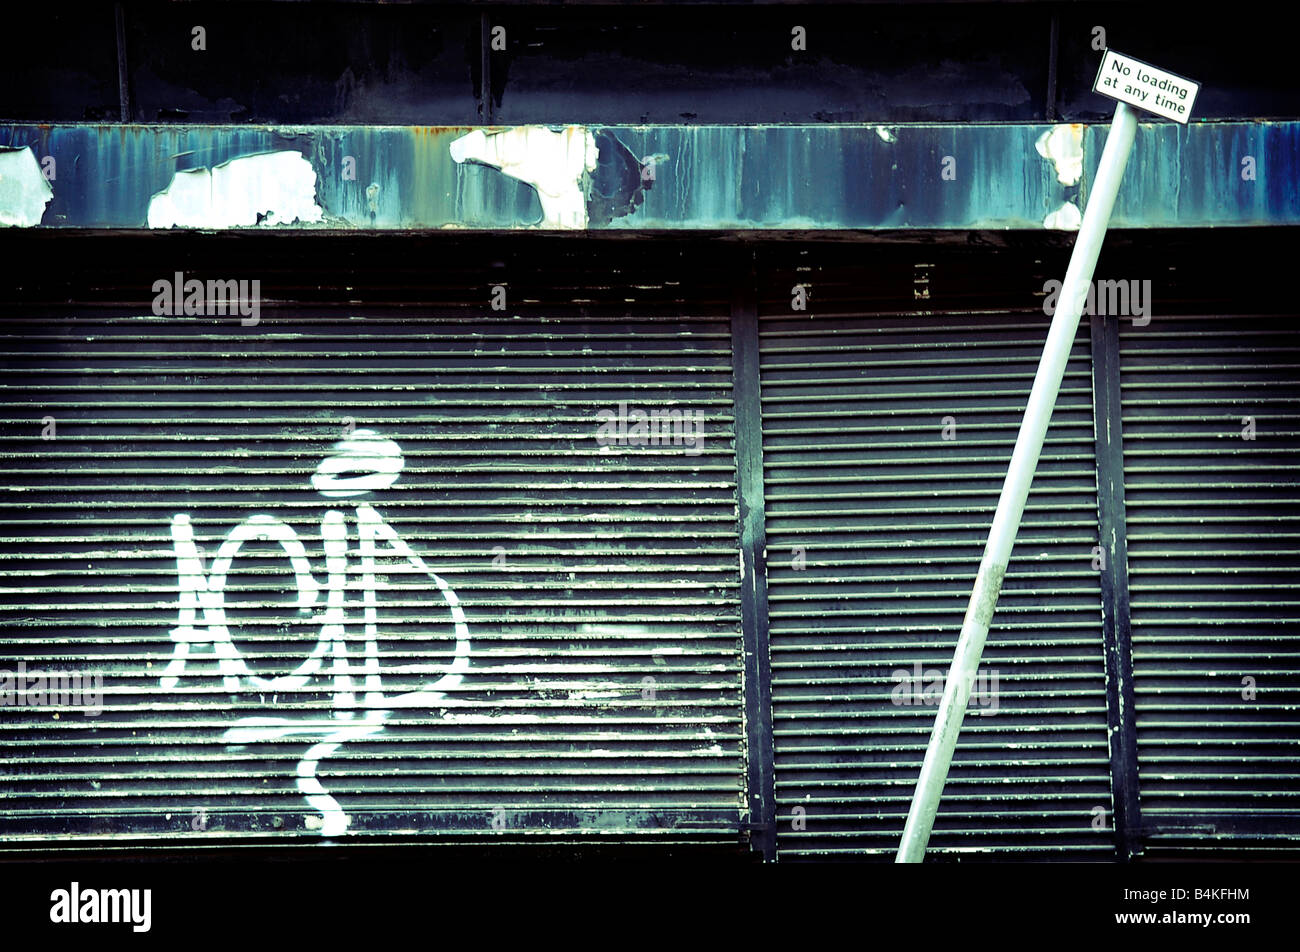 acid graffiti shutters black closed shop store thomas street northern quarter manchester pavement street urban city uk england Stock Photo